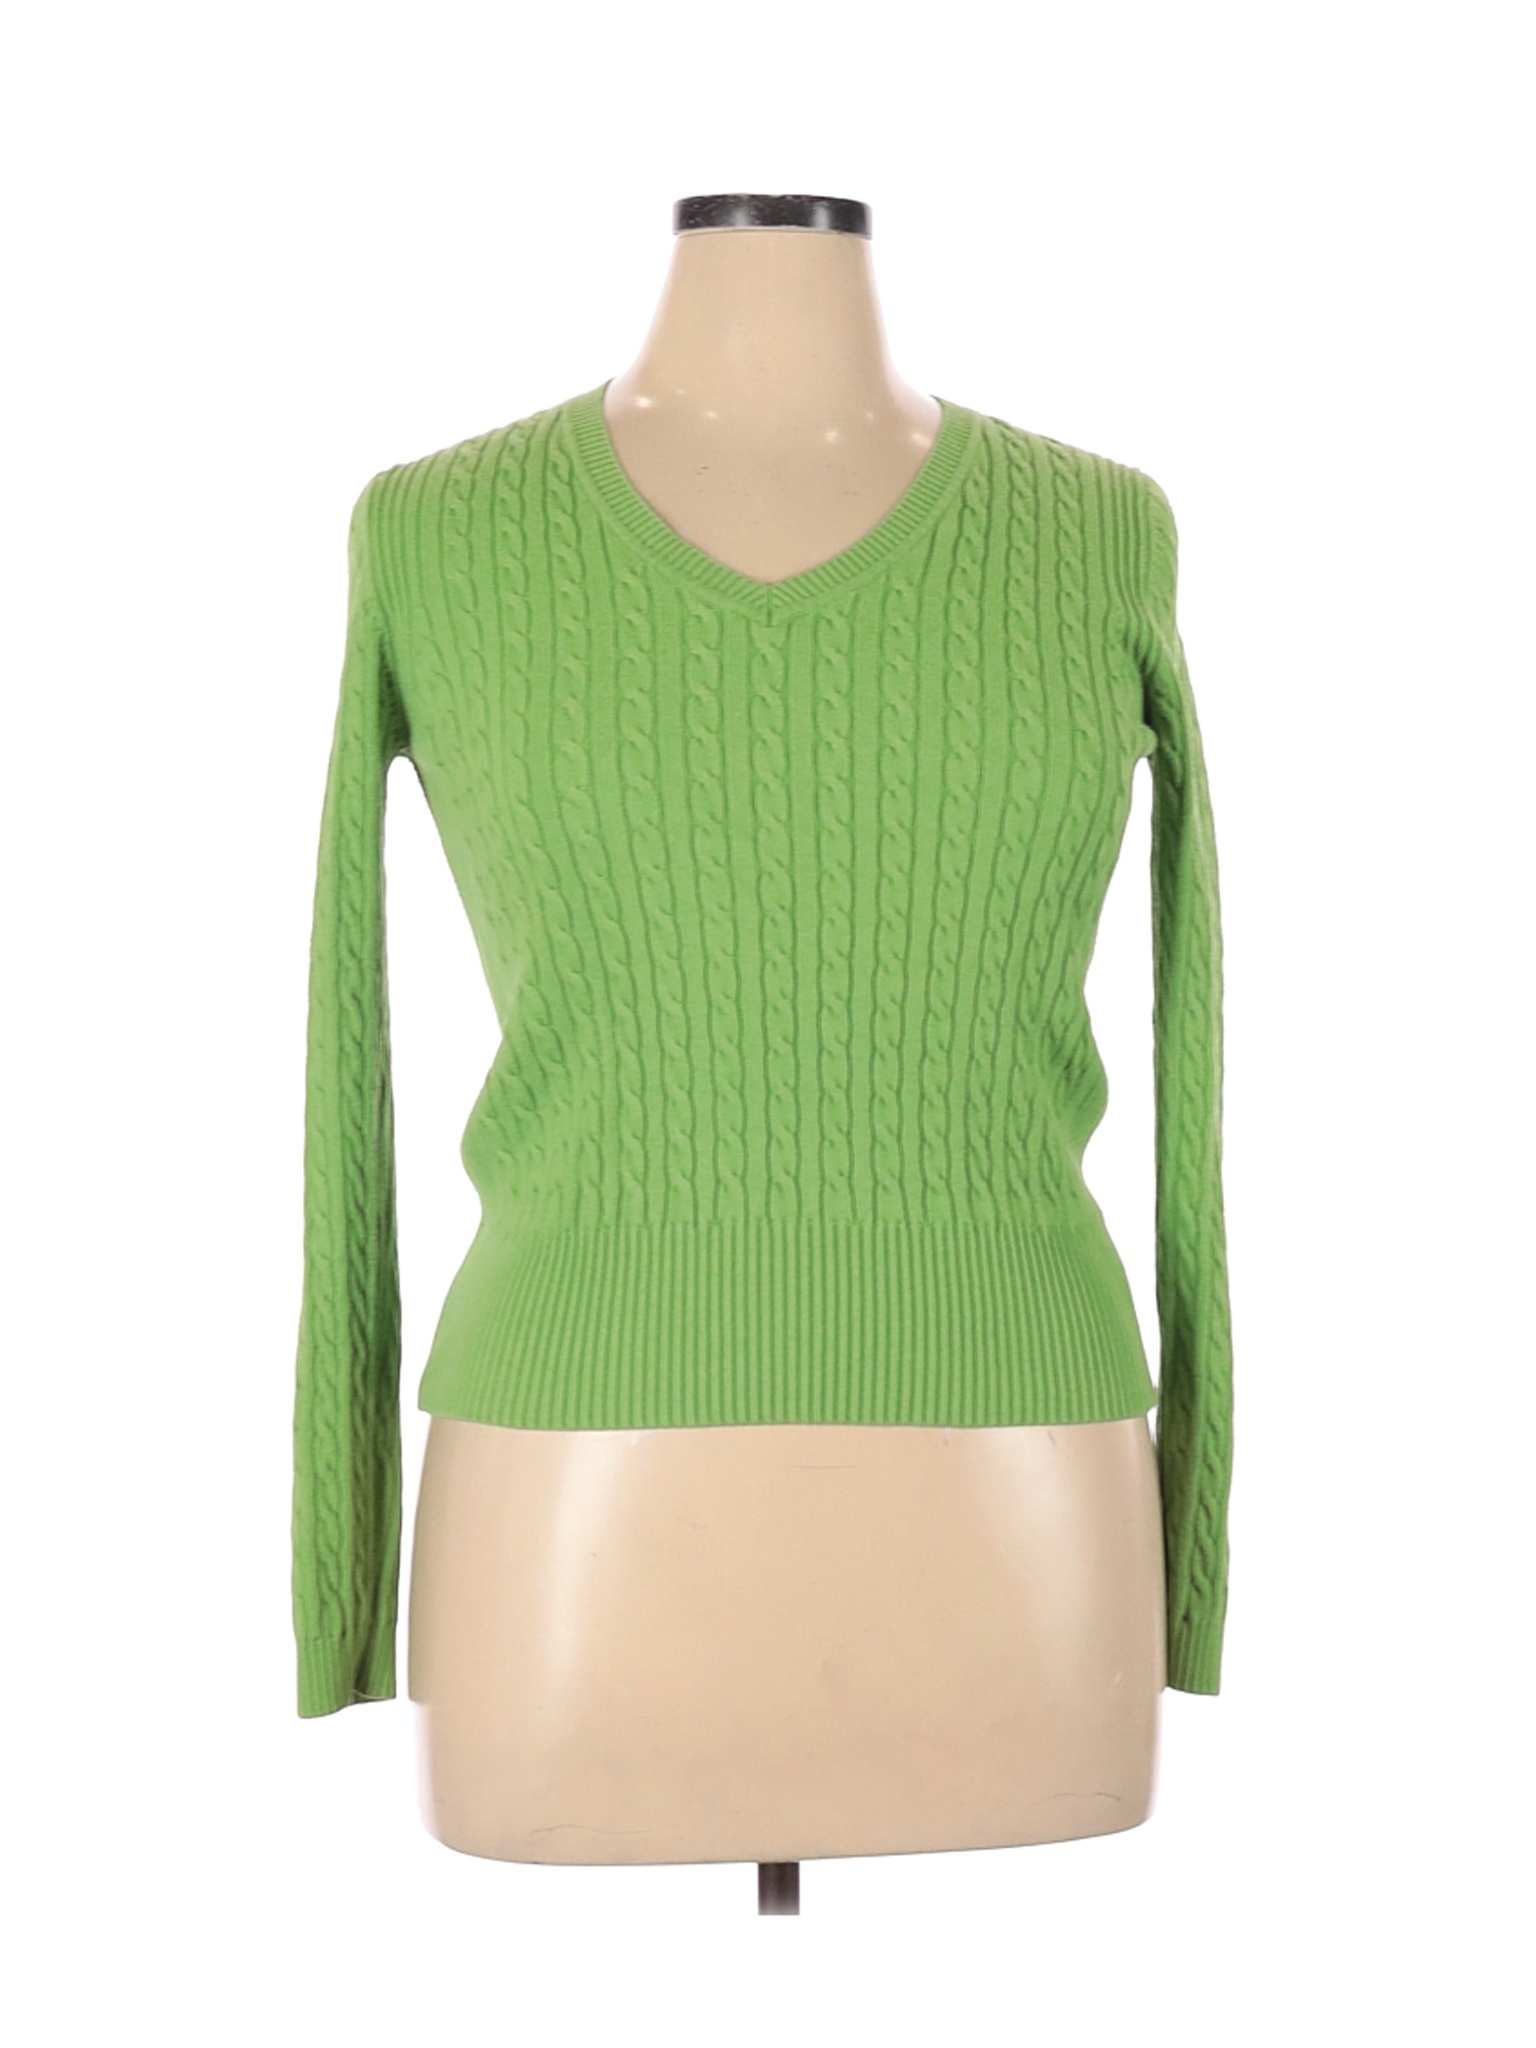 Tommy Hilfiger Women Green Pullover Sweater L | eBay